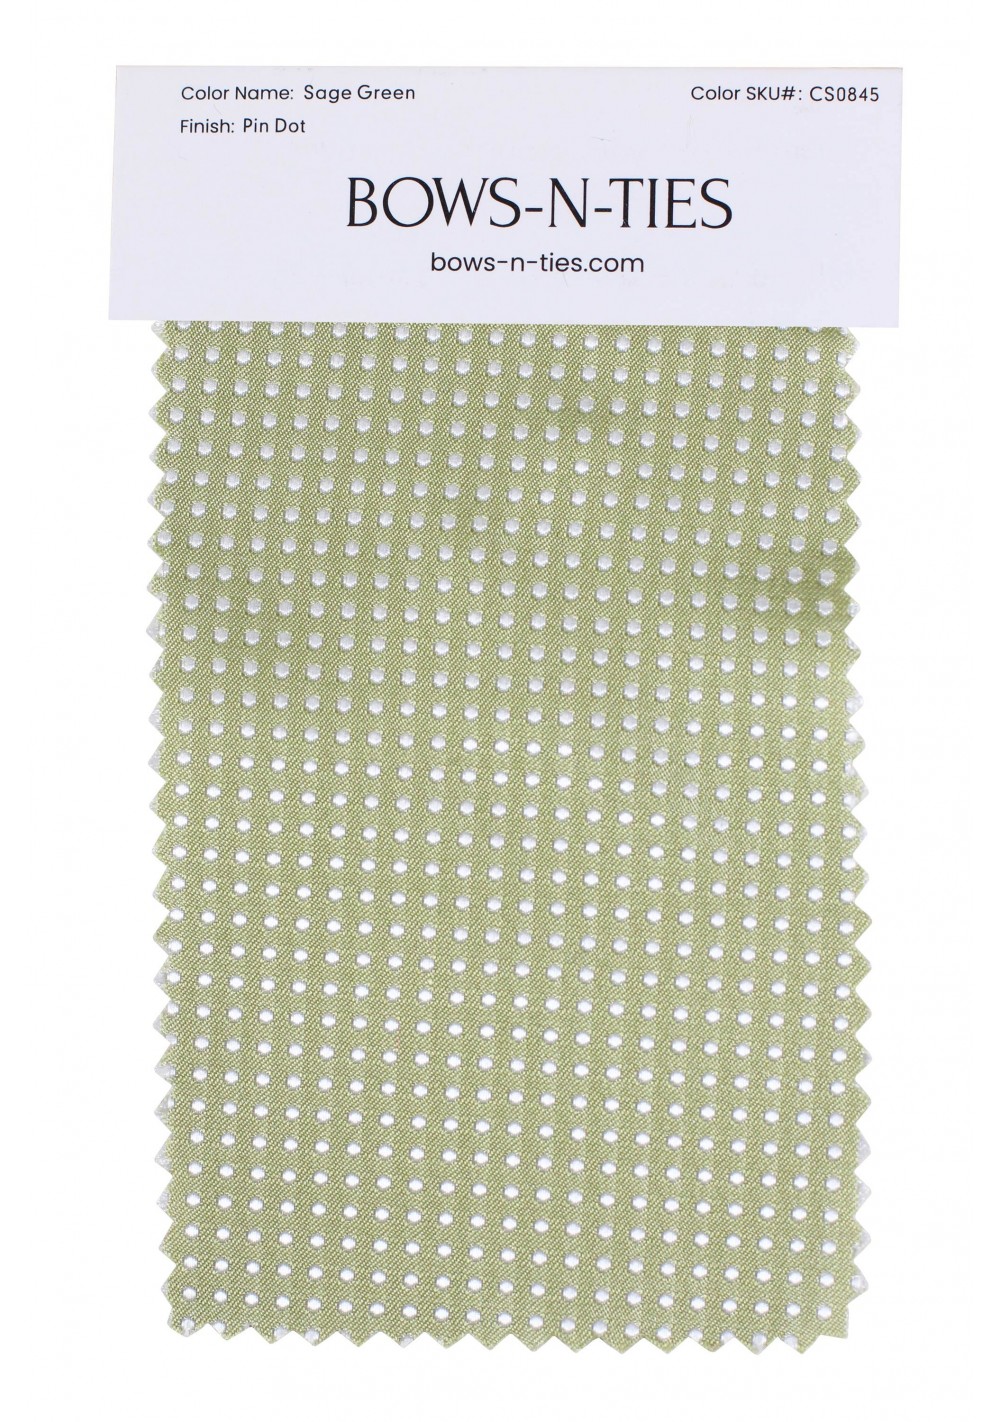 Pin Dot Fabric Swatch - Sage Green